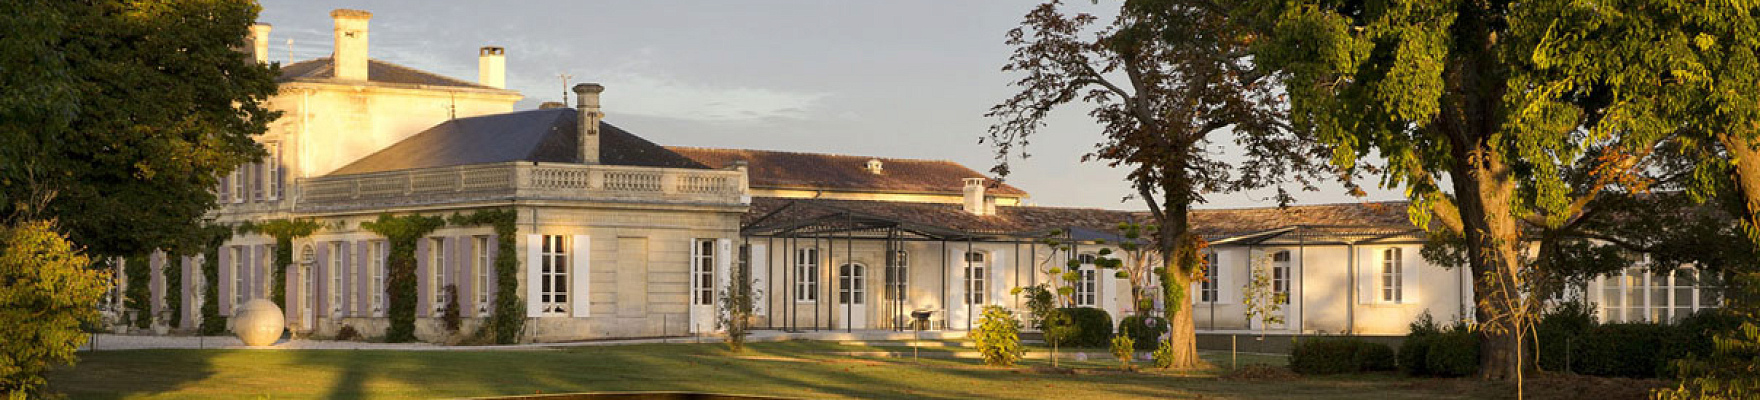 Château Gressier Grand Poujeaux